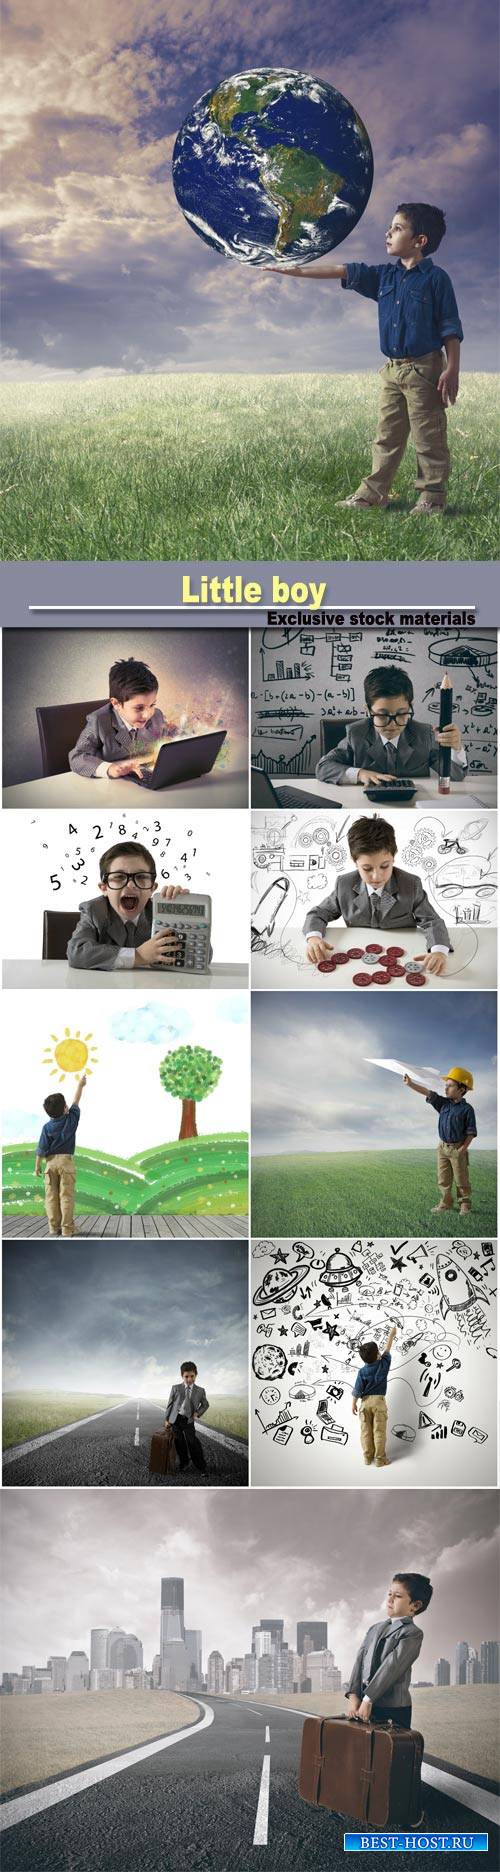 Little boy, childhood dreams and ideas